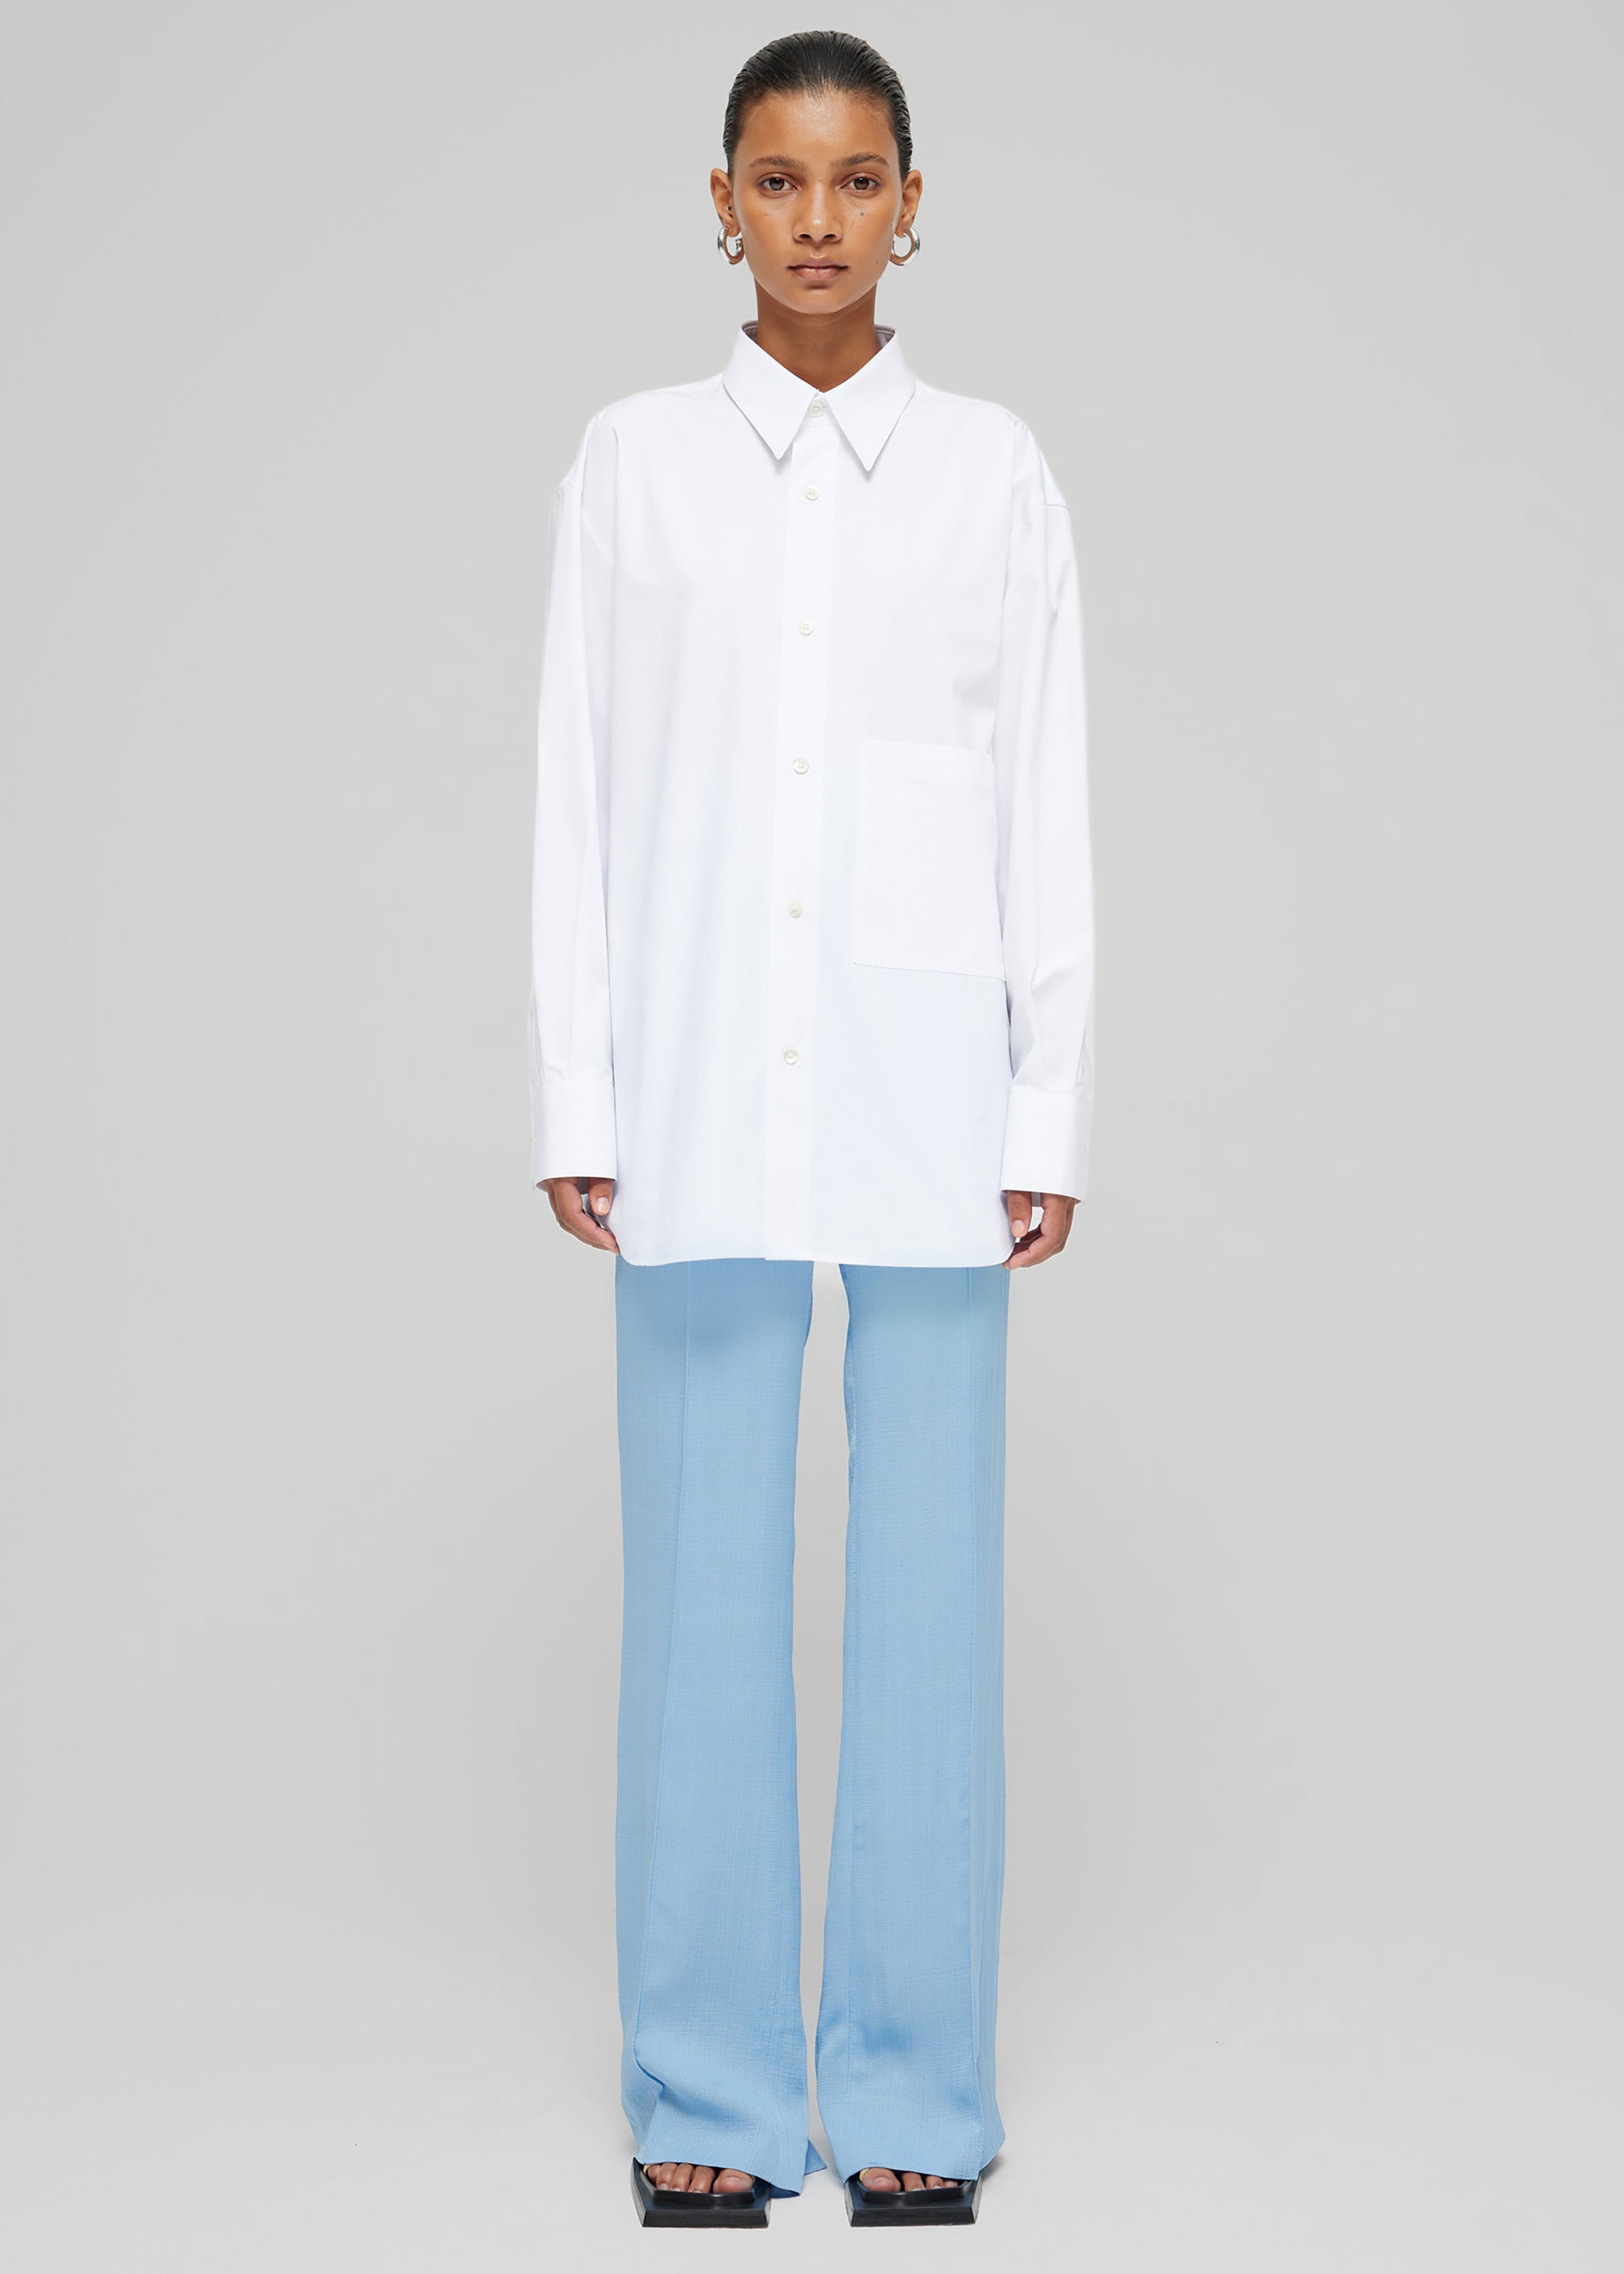 Róhe Unisex Classic Shirt - White - 4